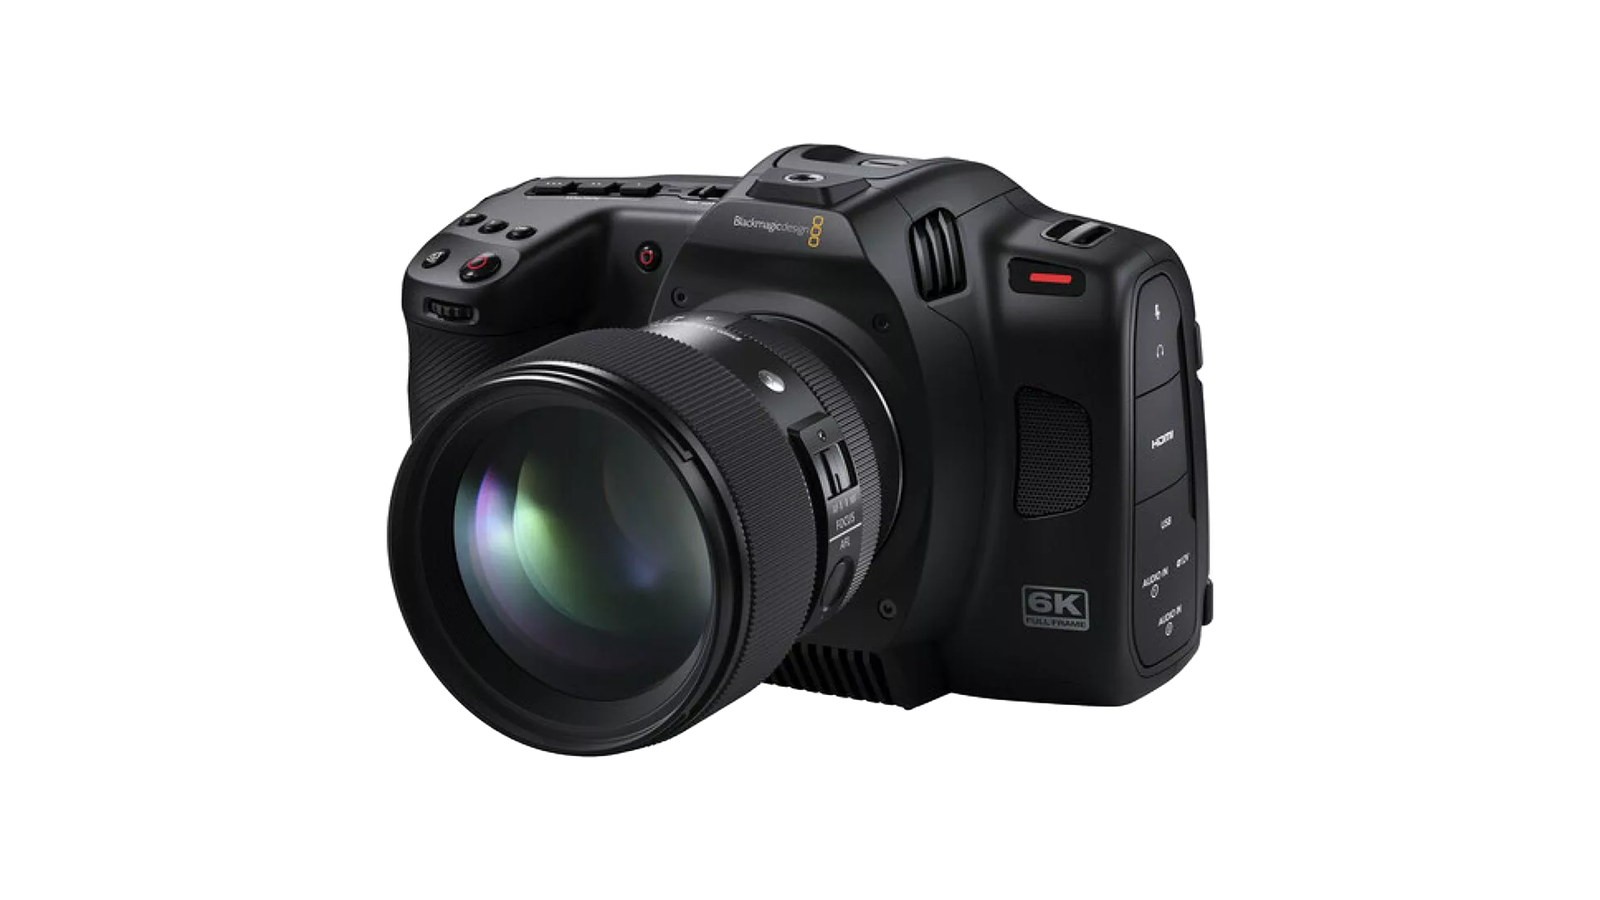 Blackmagic Cinema Camera 6K - The best dedicated video tool for filmmaking